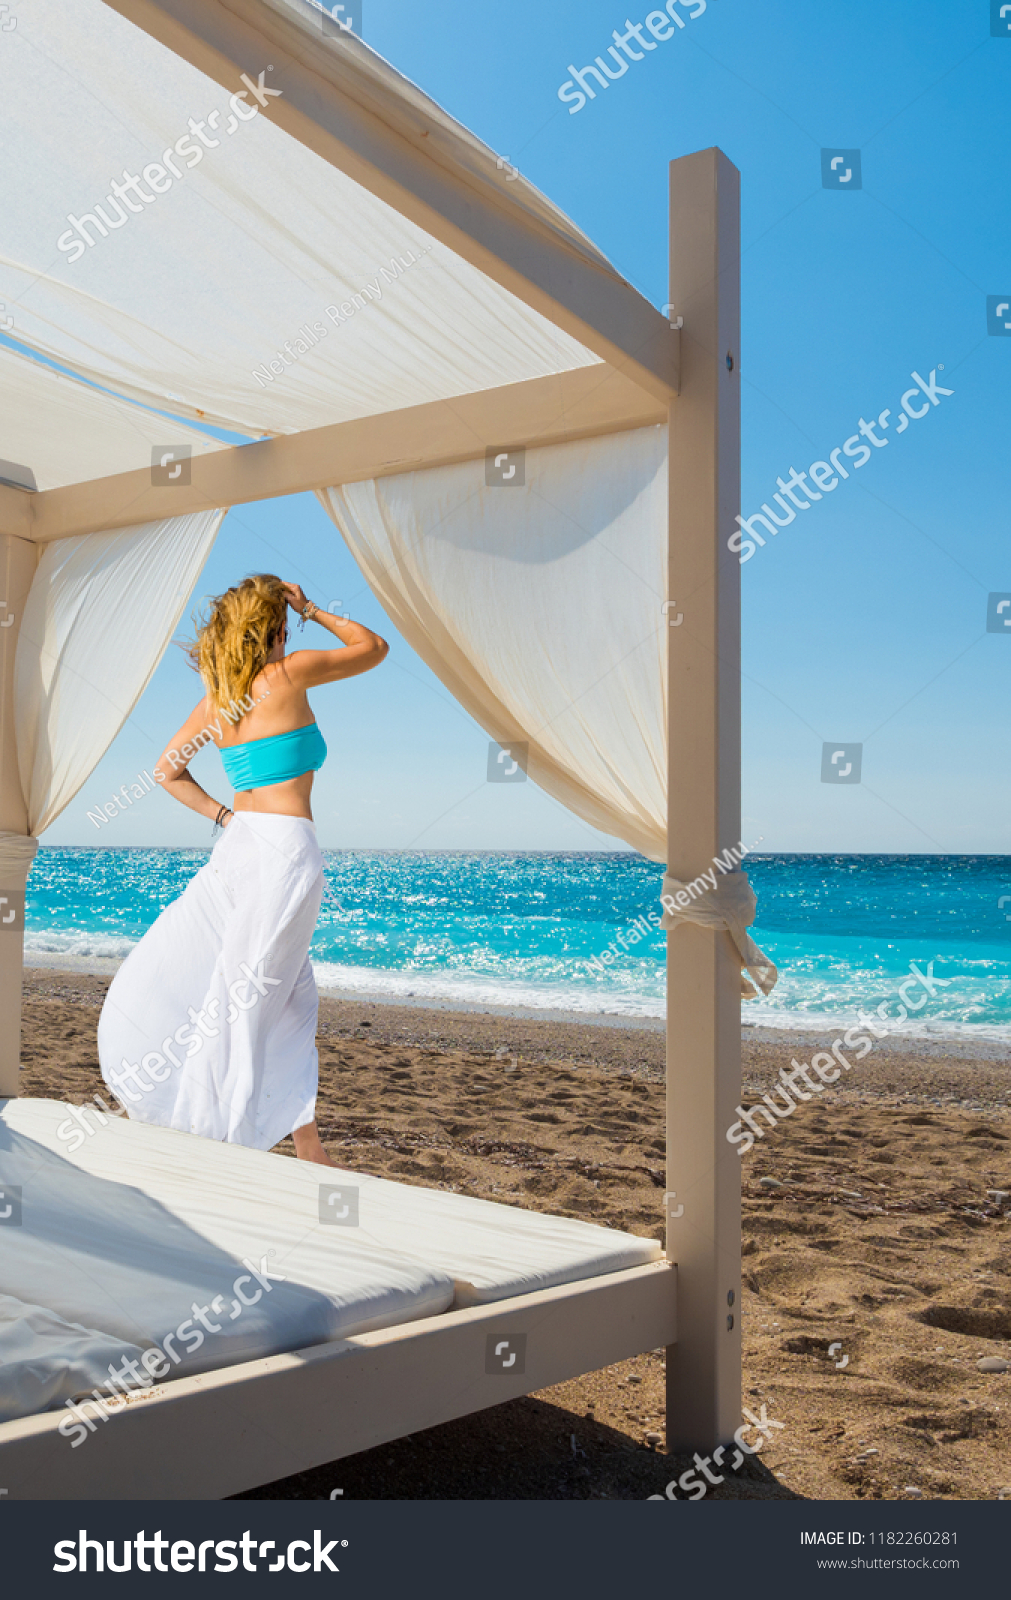 Woman suntanning - summer holidays at the tropical beach #1182260281